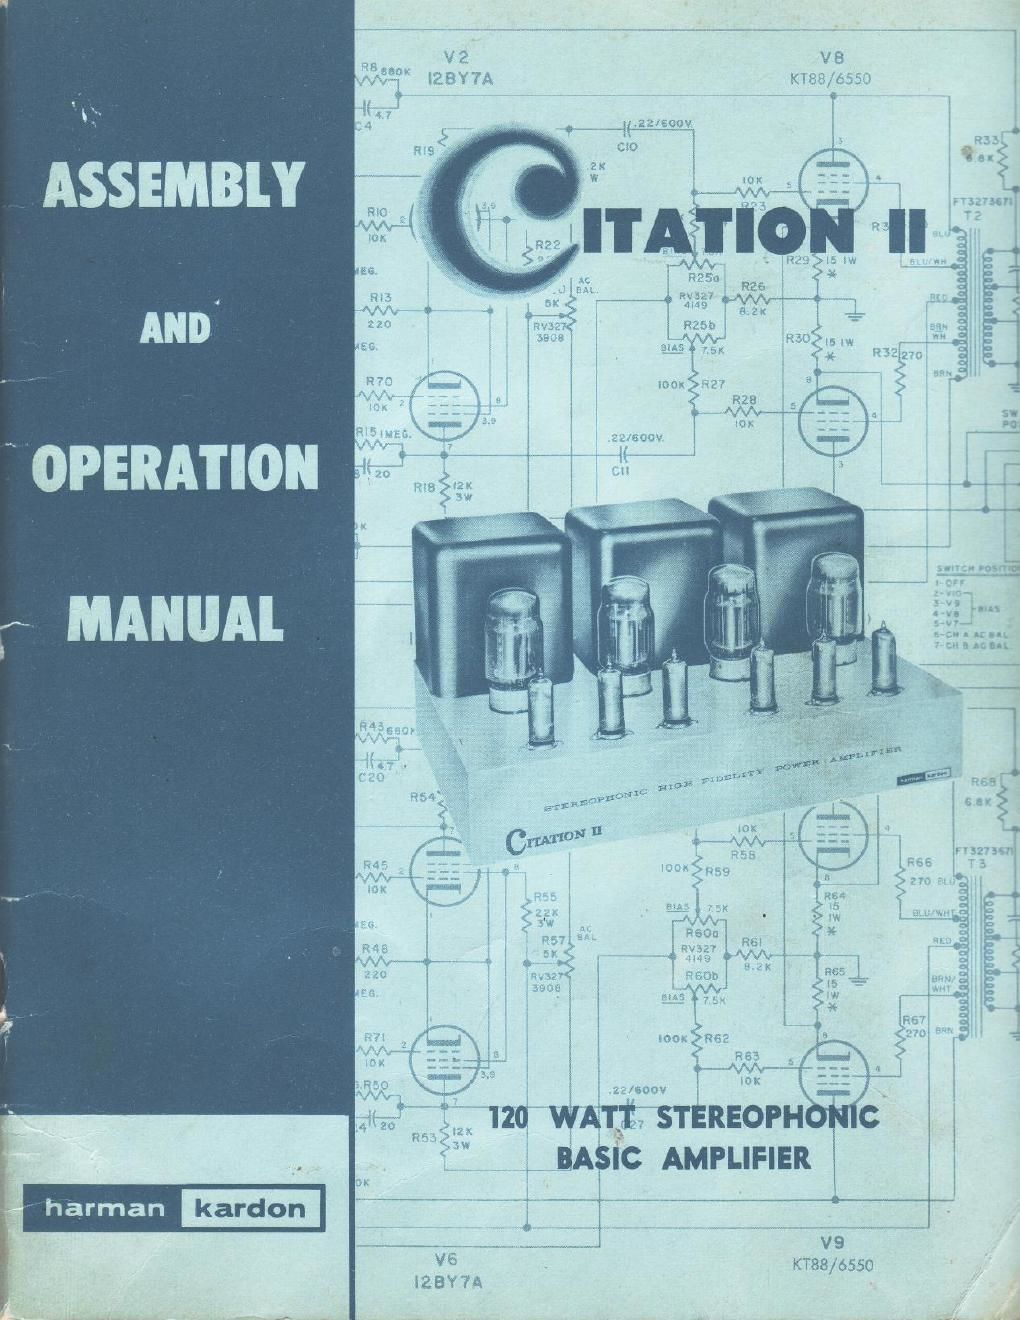 harman kardon citation ii assembly operation manual